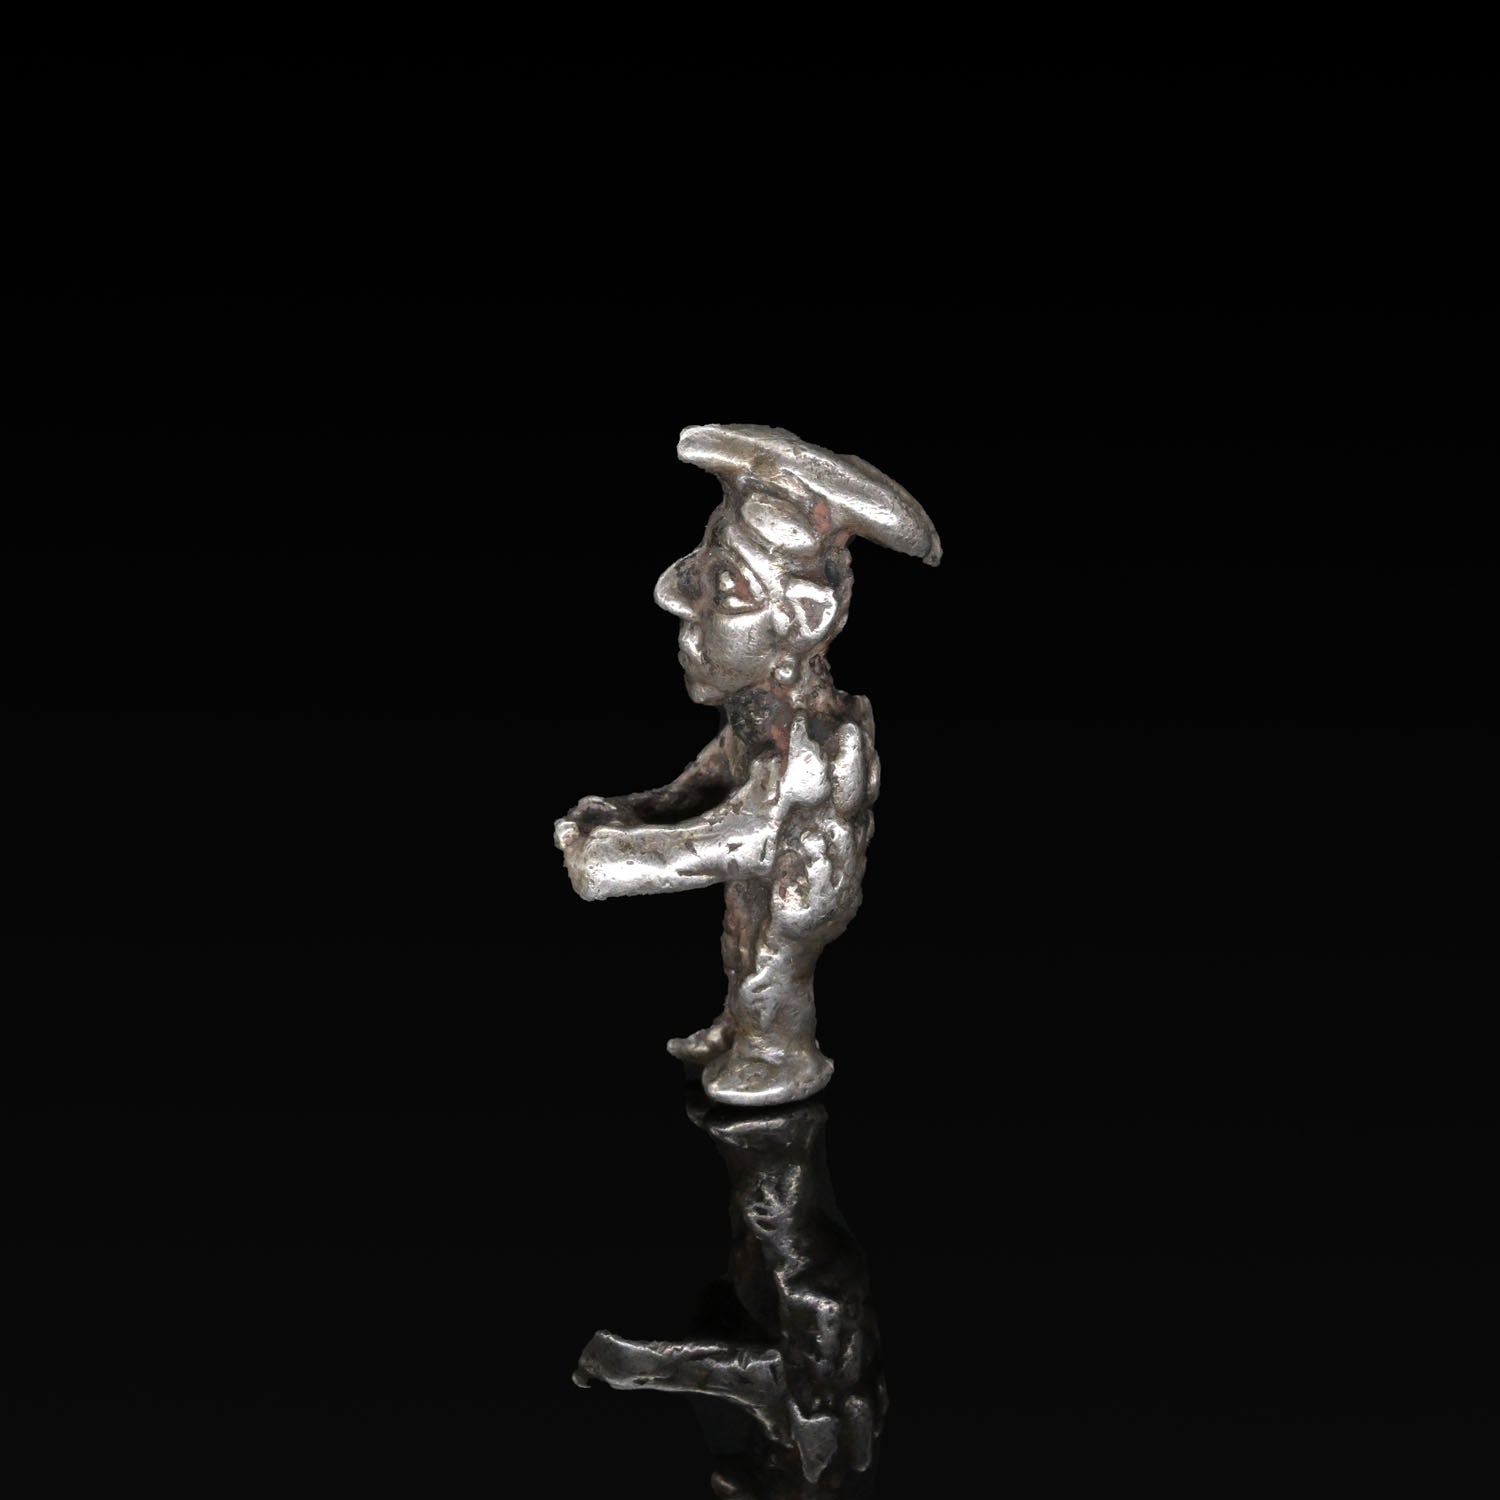 A rare Inca Silver Corn Figurine, Inca Empire, ca. 1400 - 1533 CE